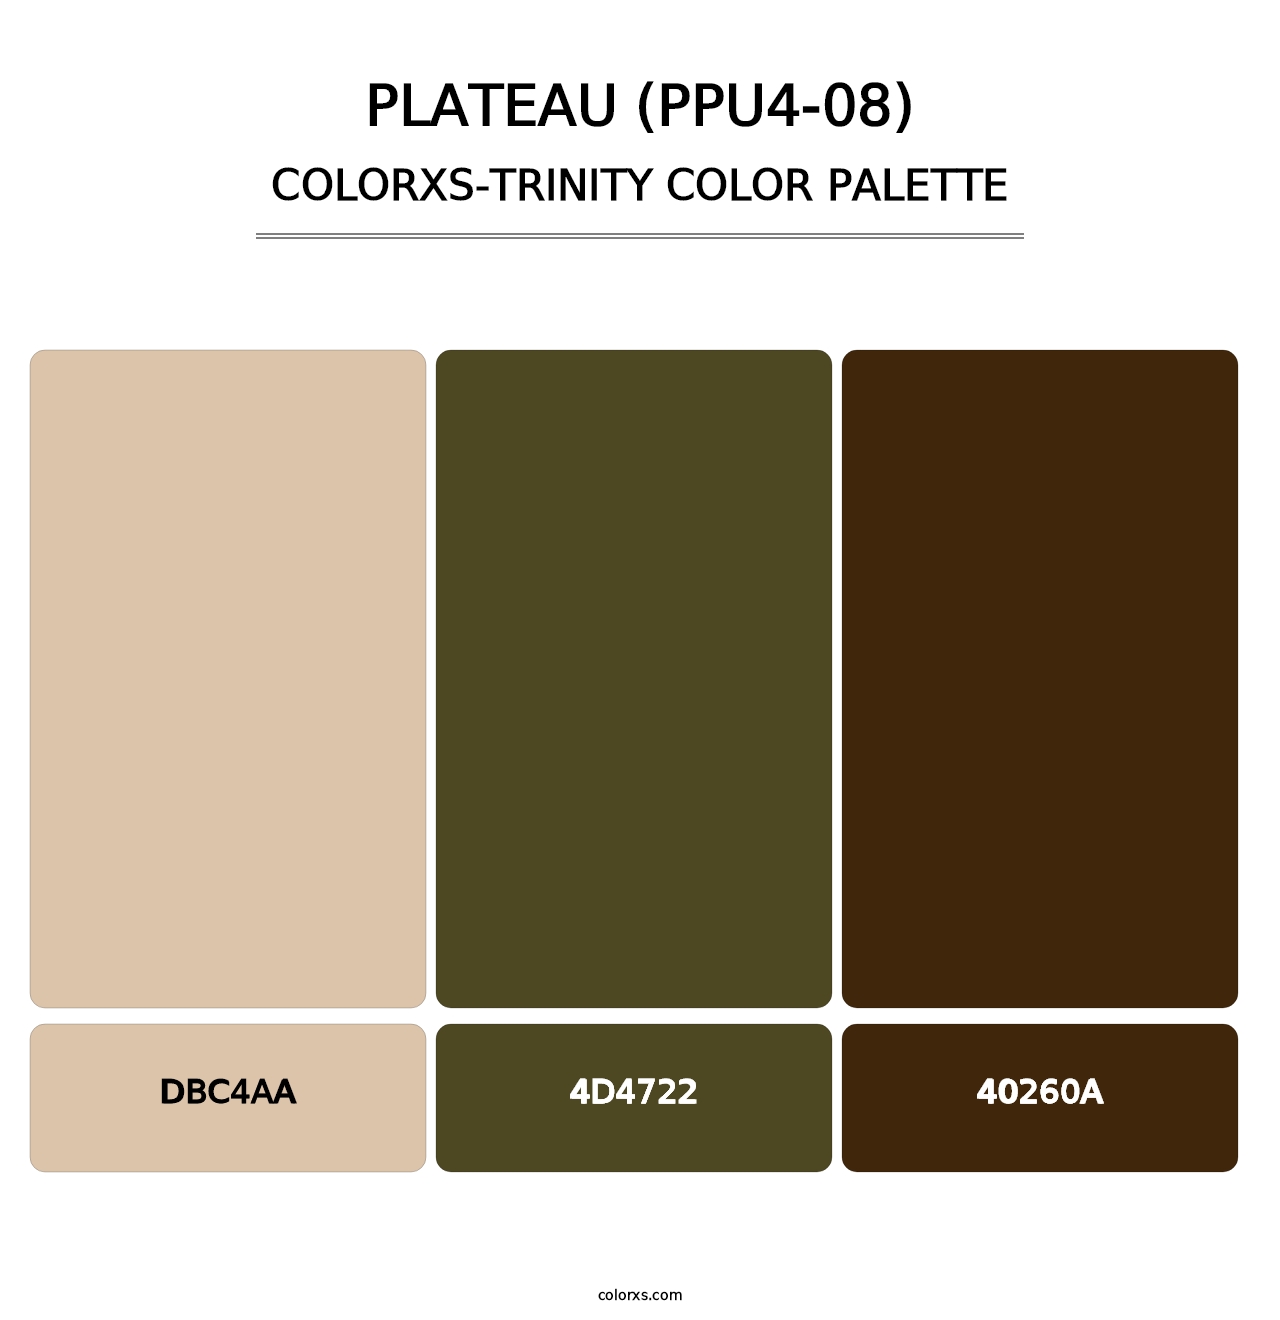 Plateau (PPU4-08) - Colorxs Trinity Palette